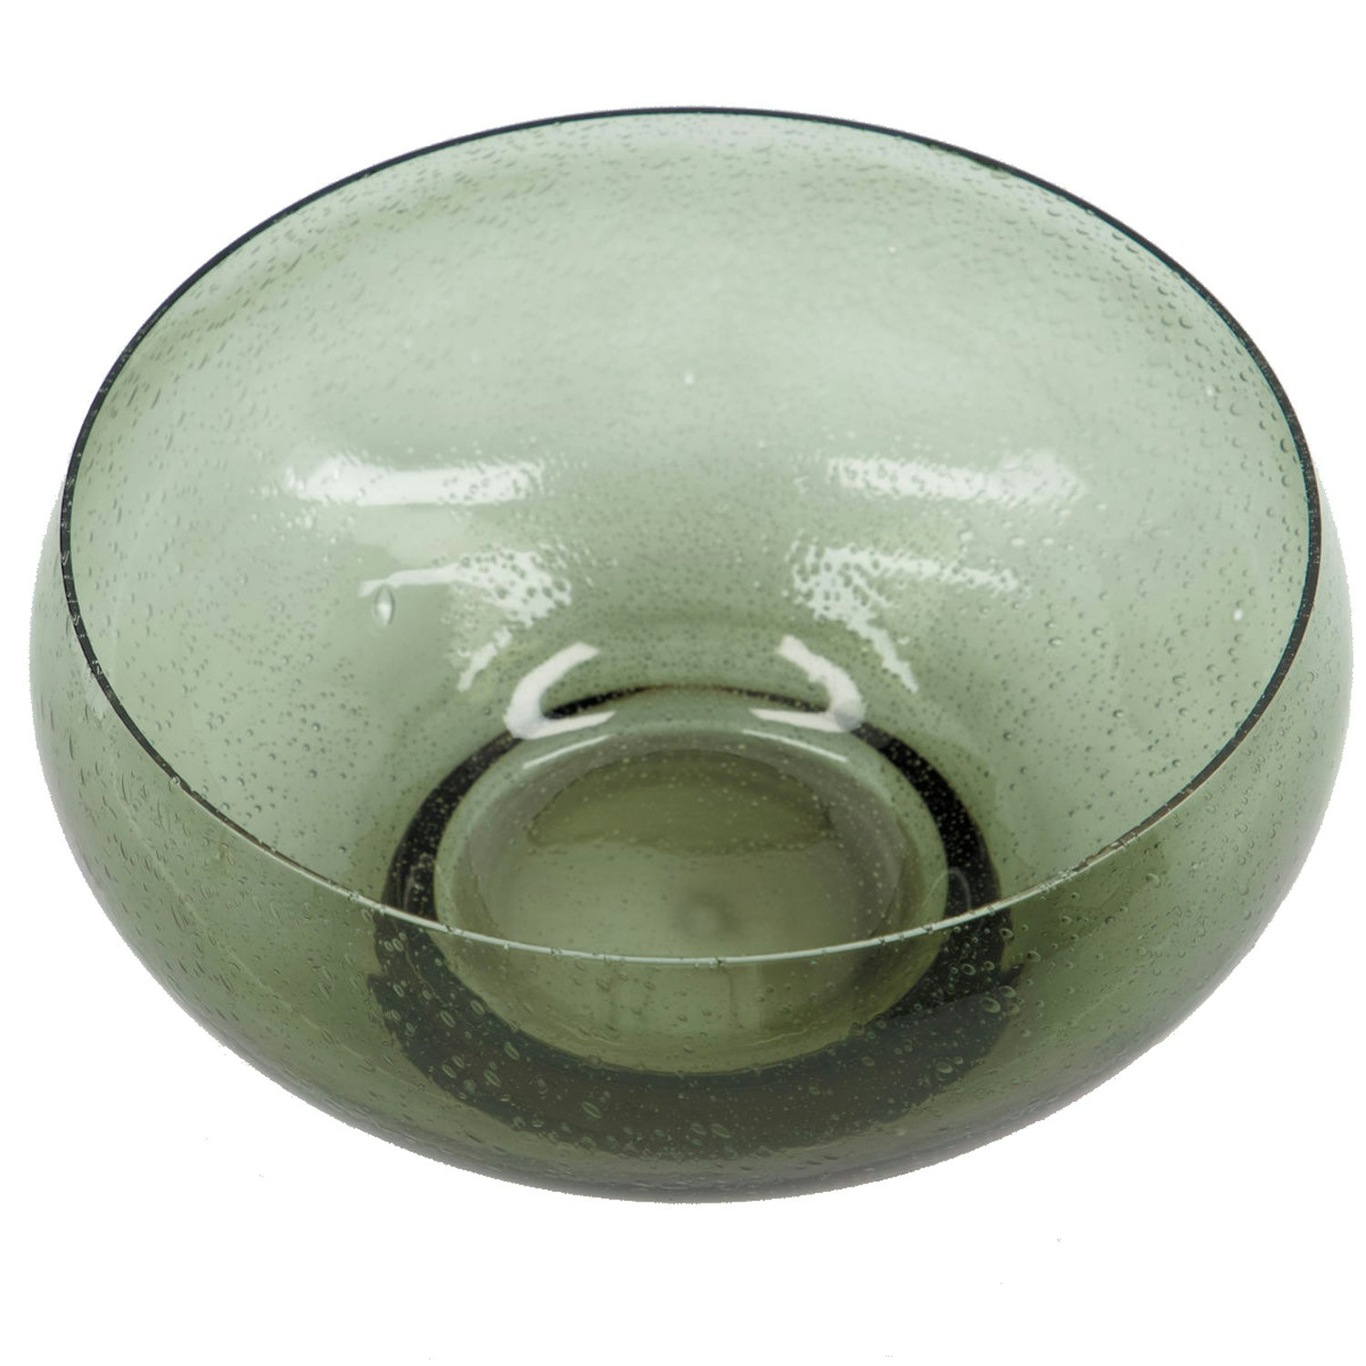 https://royaldesign.com/image/2/house-doctor-rain-bowl-18-cm-green-0?w=800&quality=80